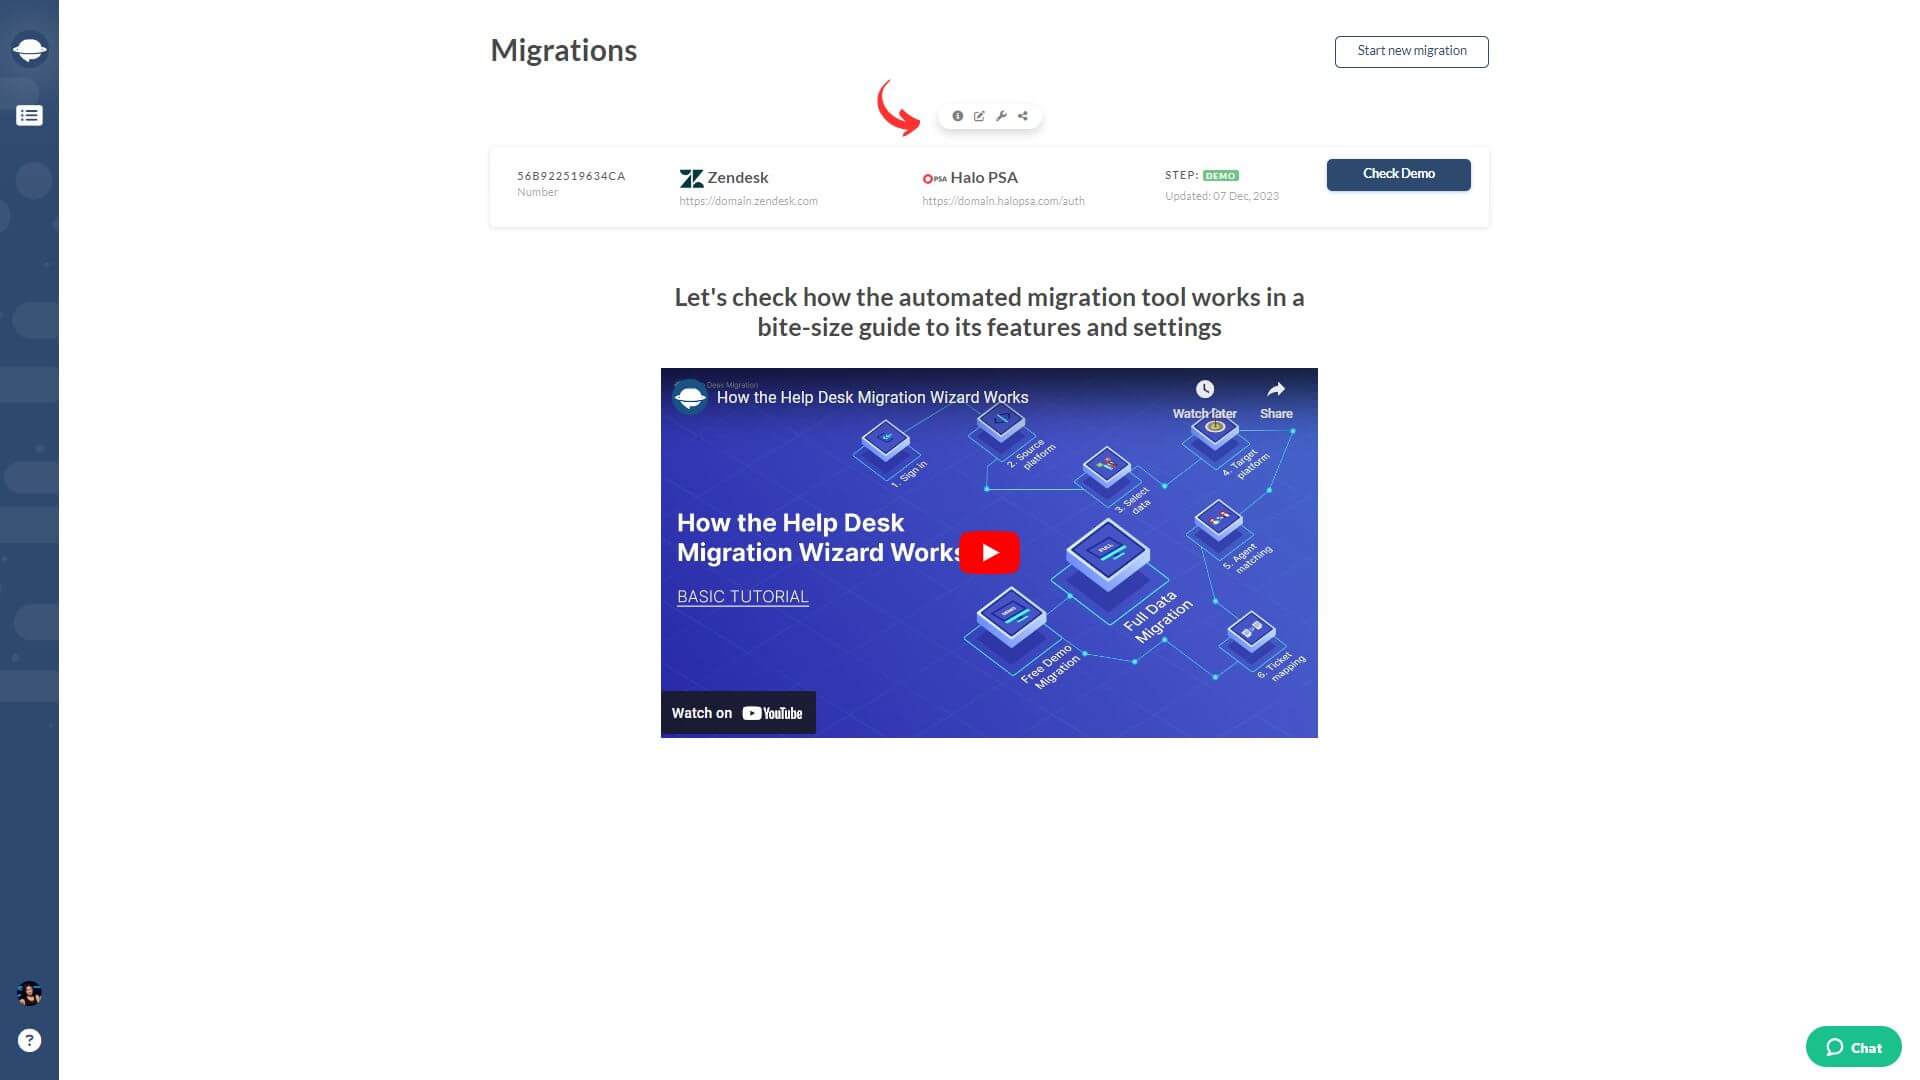 Halo PSA Migration Dashboard